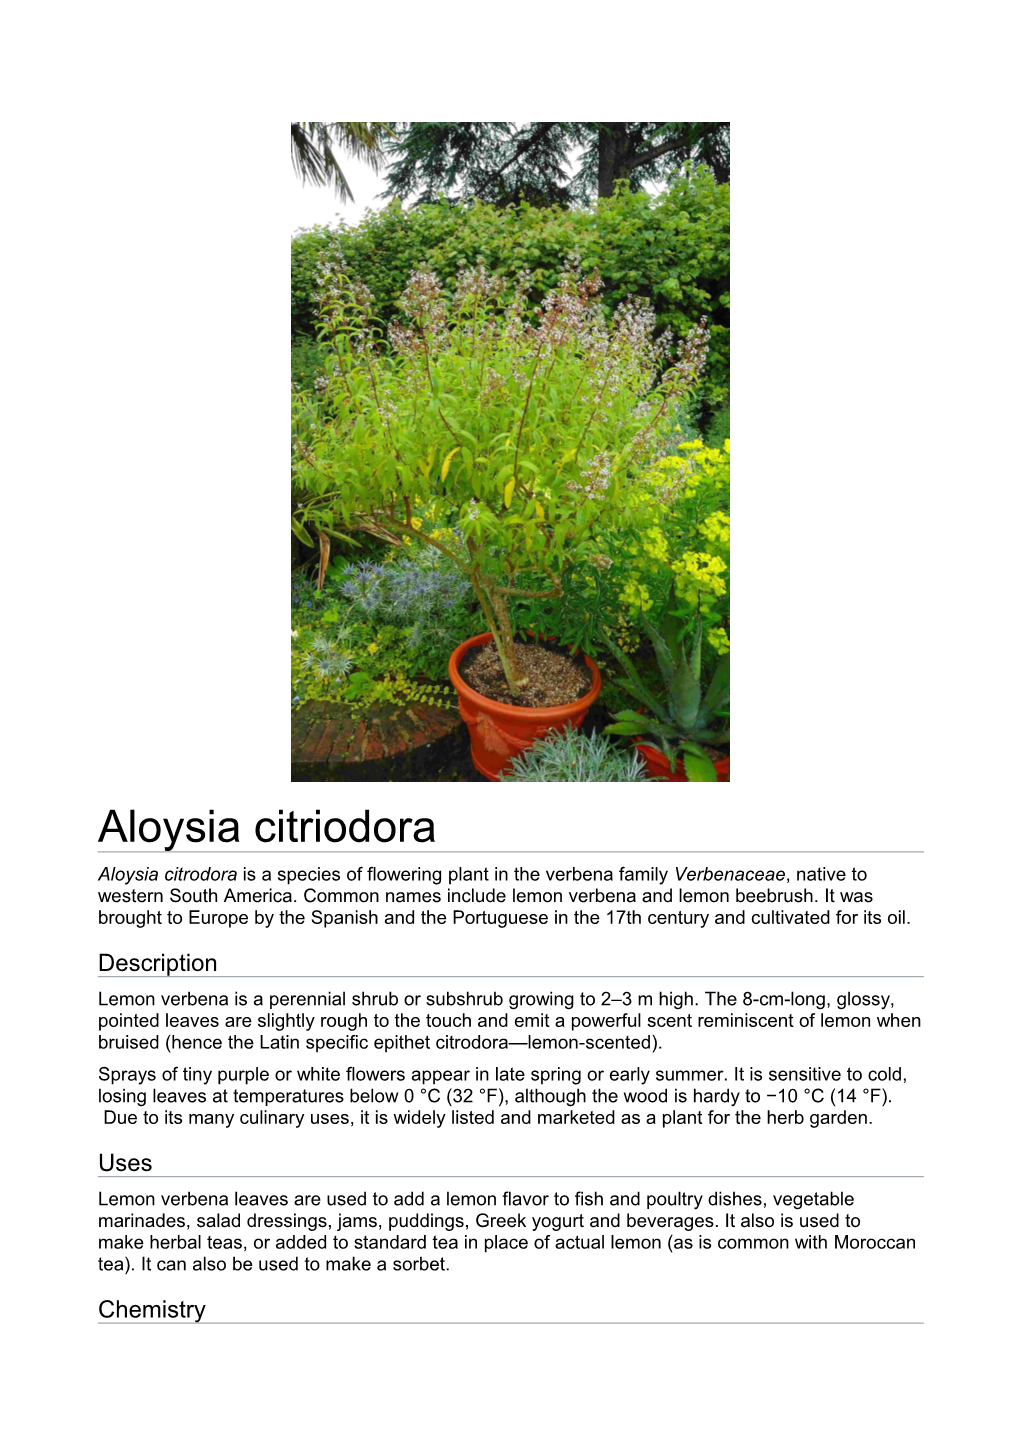 Aloysia Citriodora Aloysia Citrodora Is a Species of Flowering Plant in the Verbena Family Verbenaceae, Native to Western South America